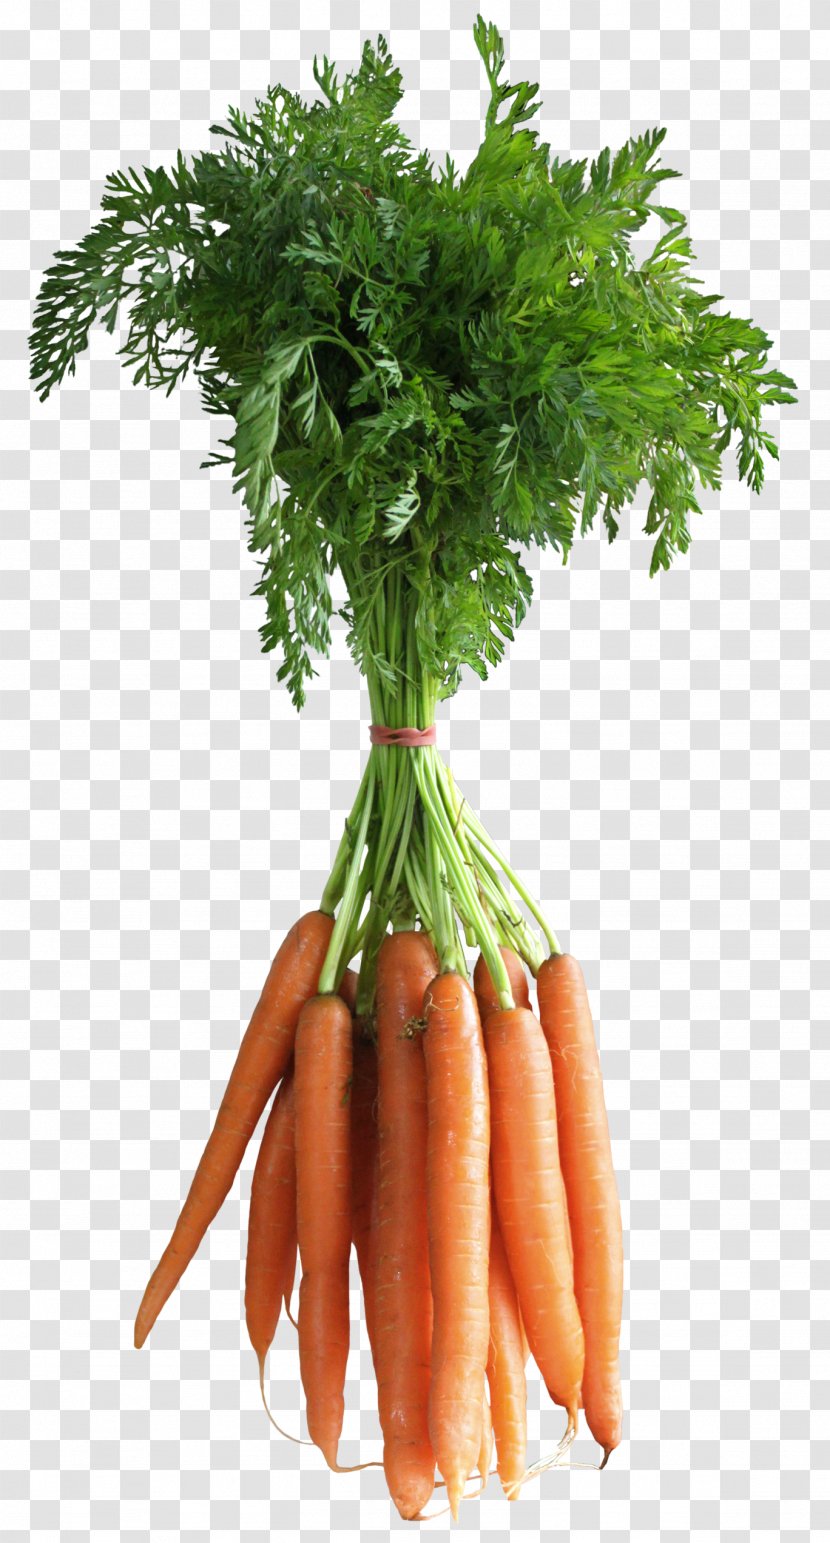 Carrot Vegetable Computer File - Produce - Carrots Clipart Picture Transparent PNG